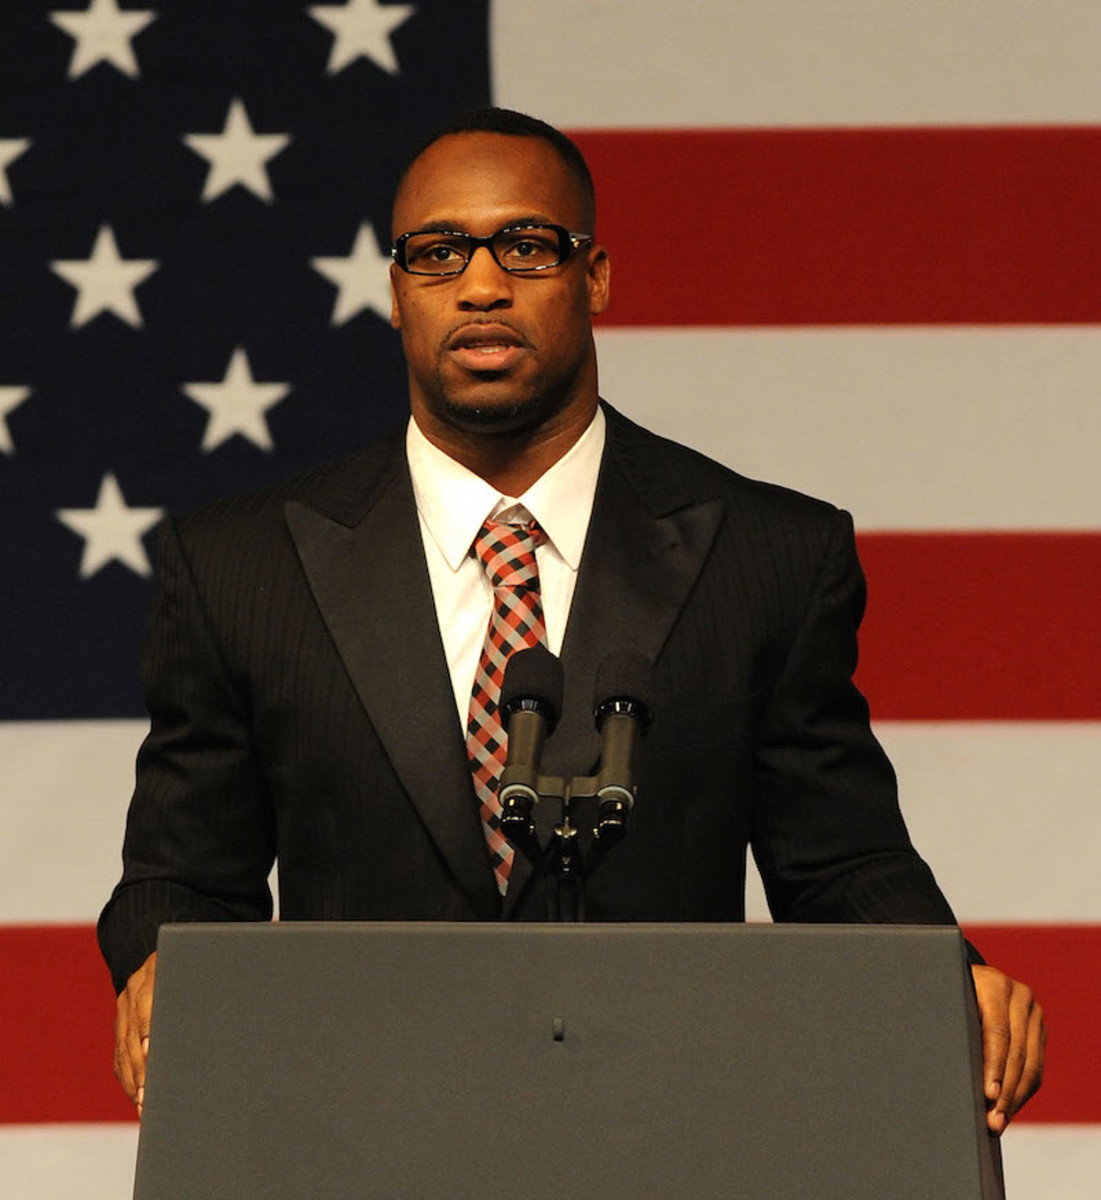 NFL tight end Vernon Davis speaks at a San Francisco fundraiser for Obama in 2012.